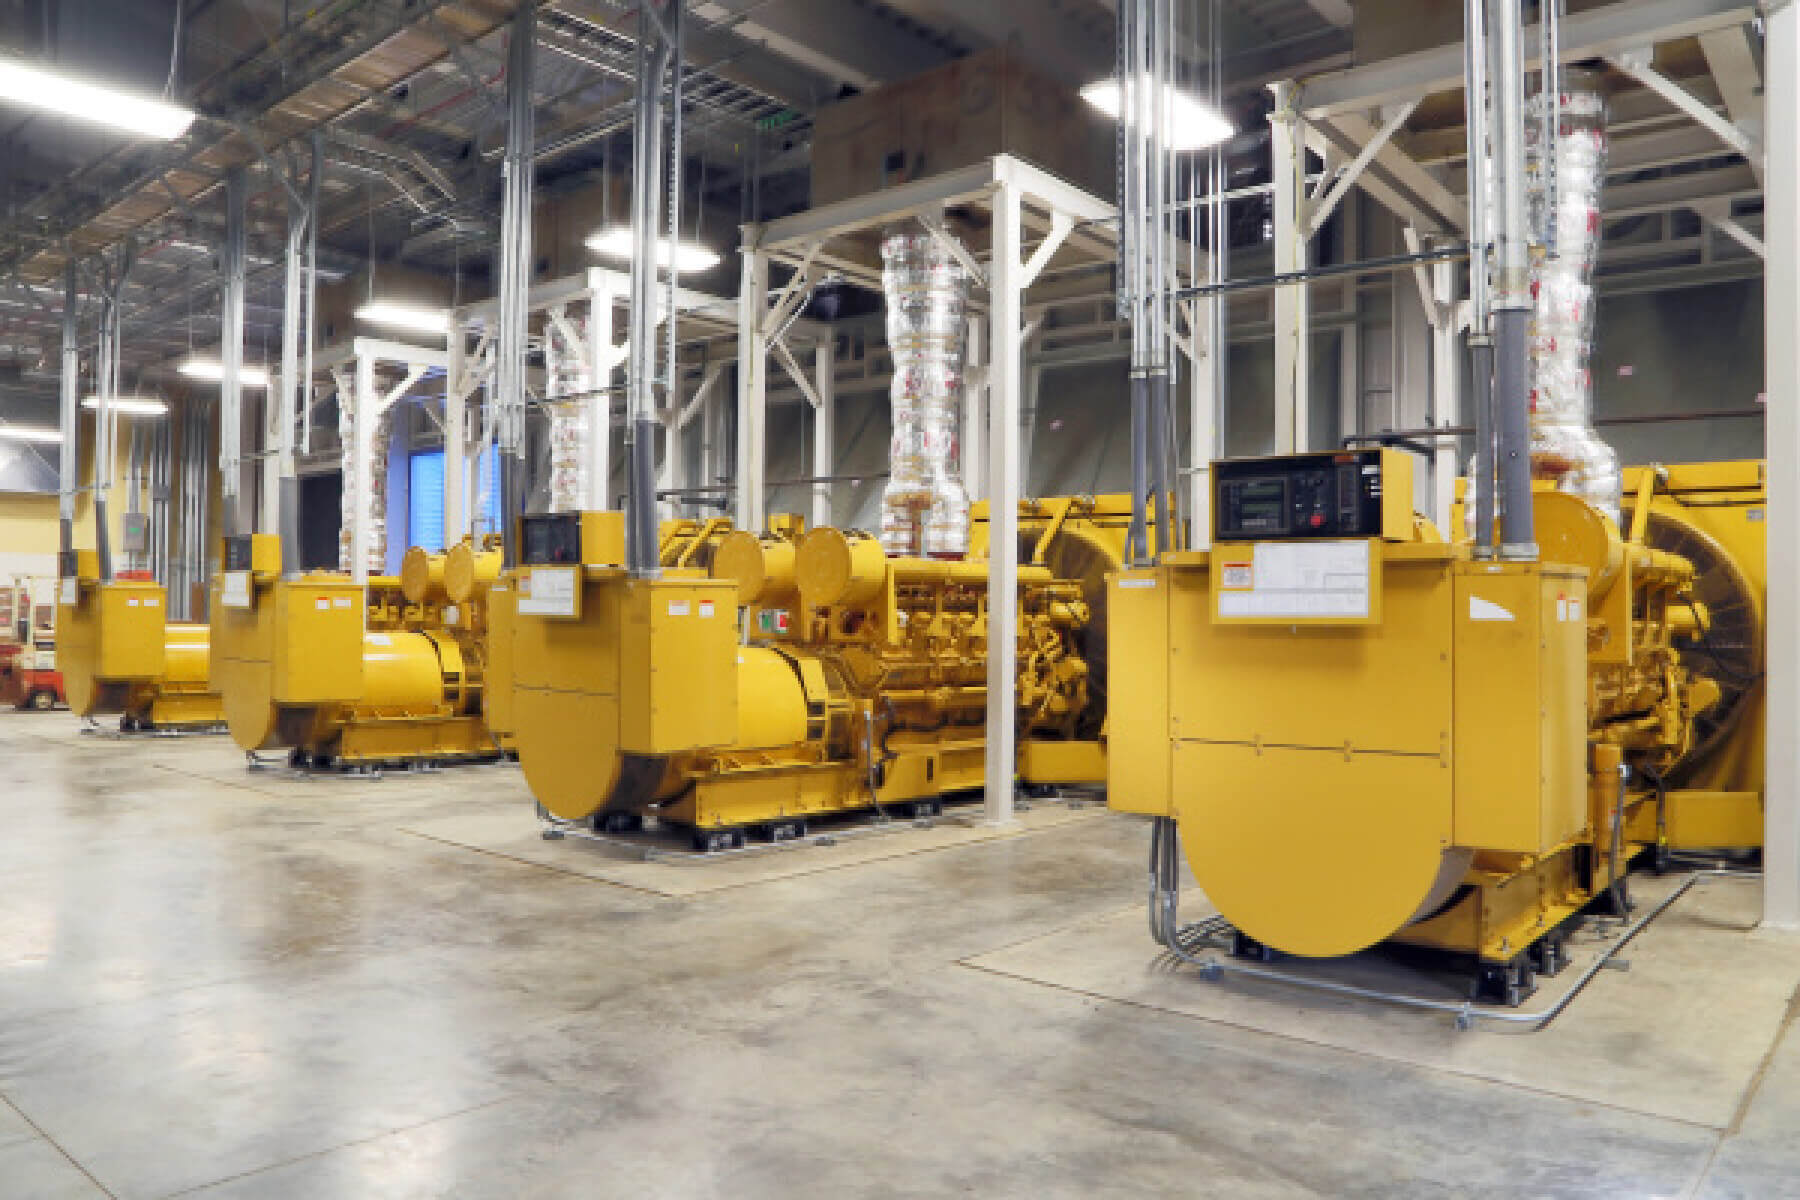 Upgraded diesel generators at K.R. Harrington Water Treatment Plant